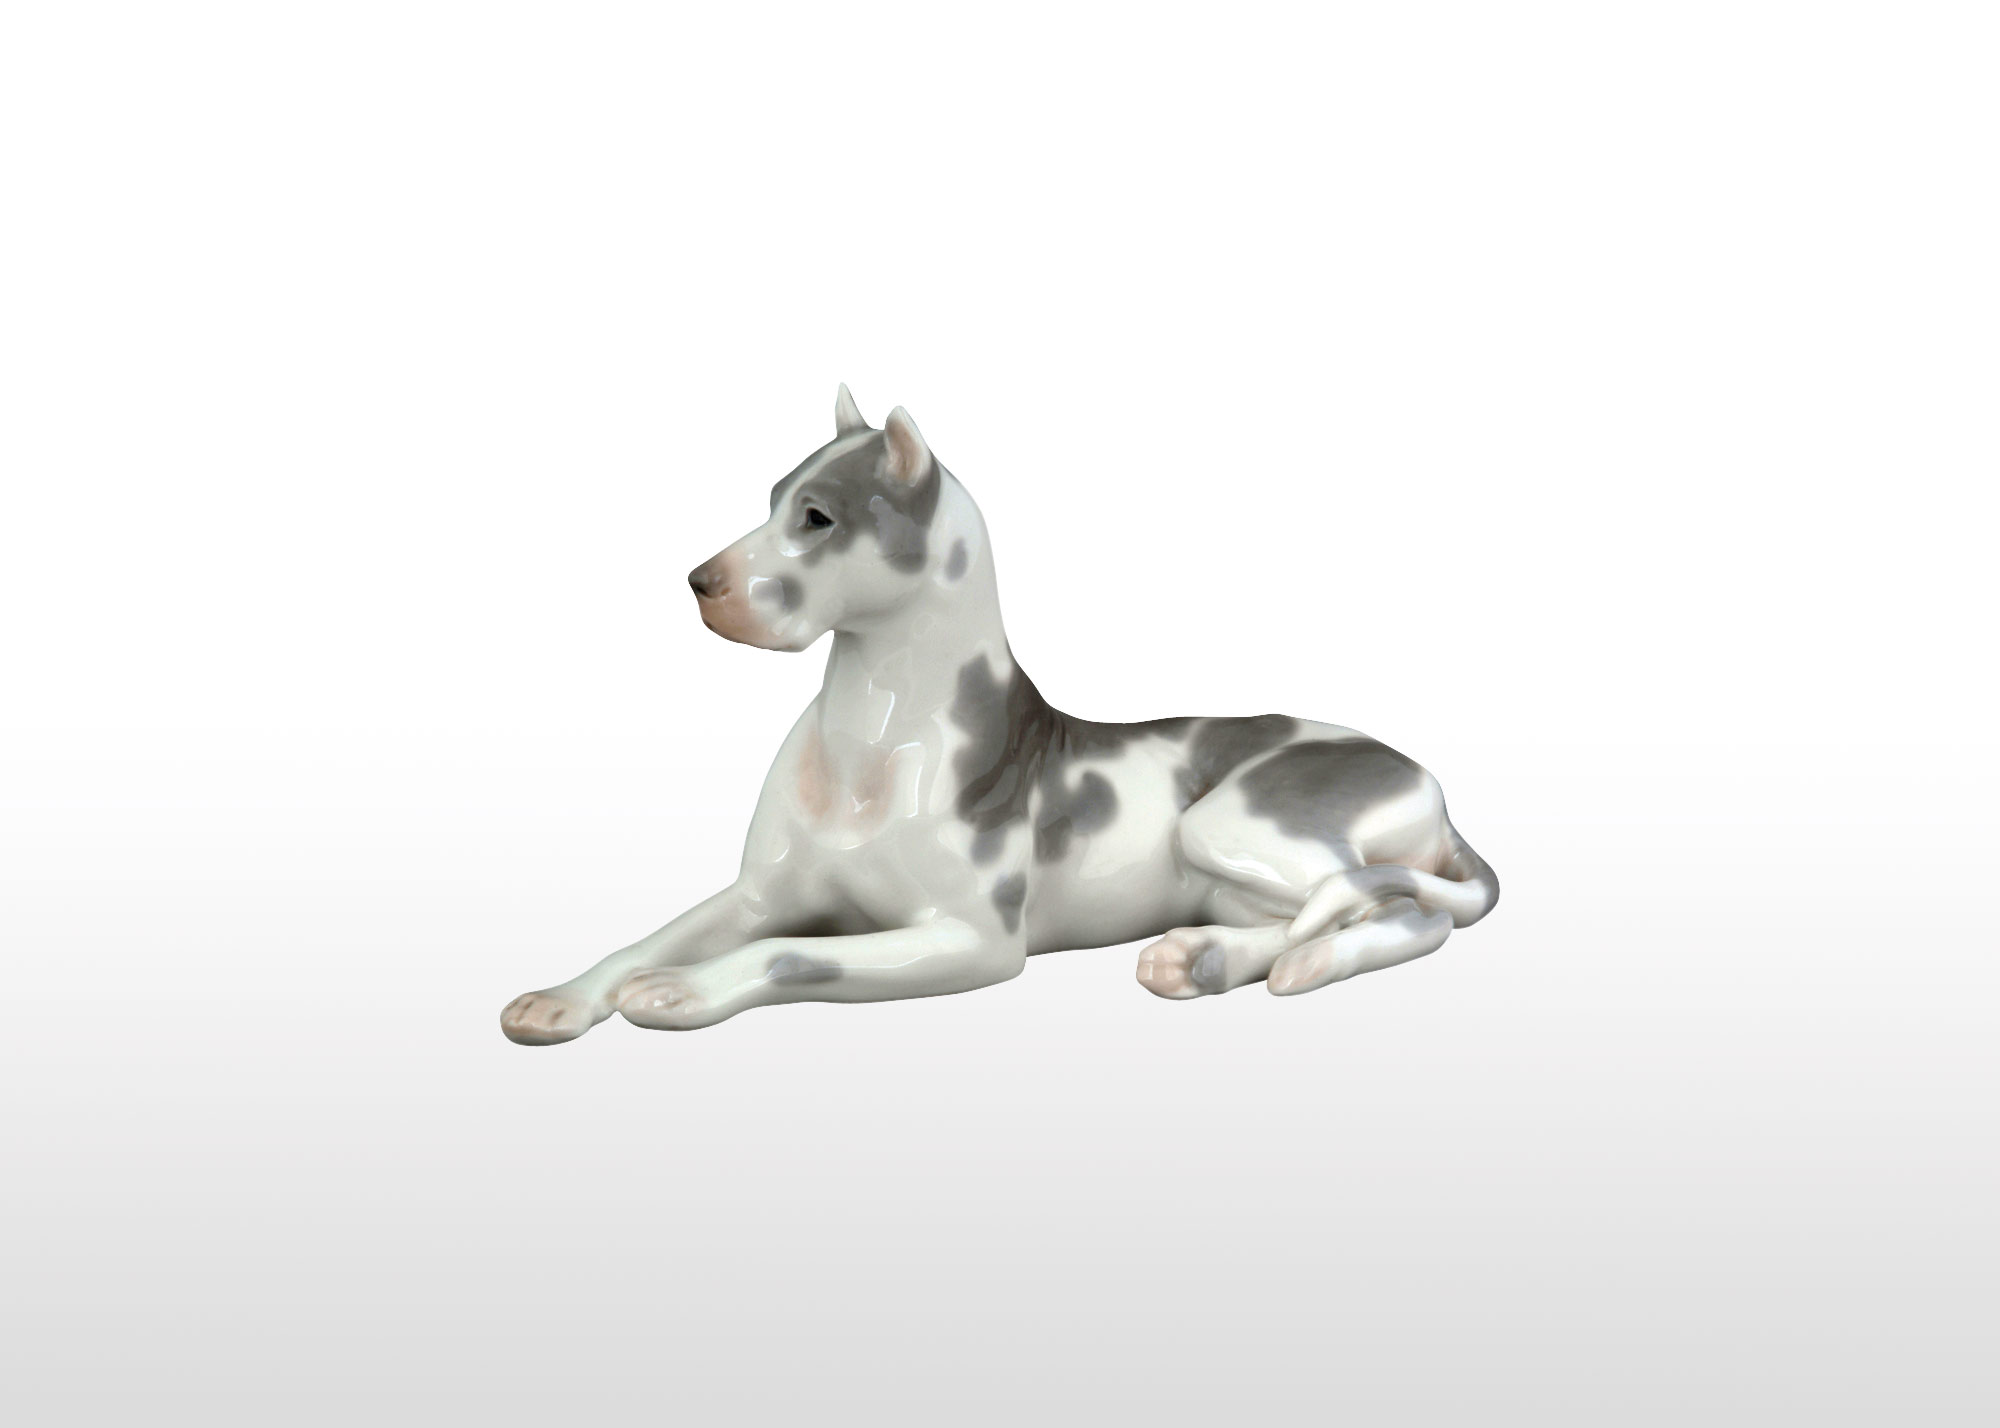 Buy Harlequin Great Dane Dog Figurine at GoldenCockerel.com